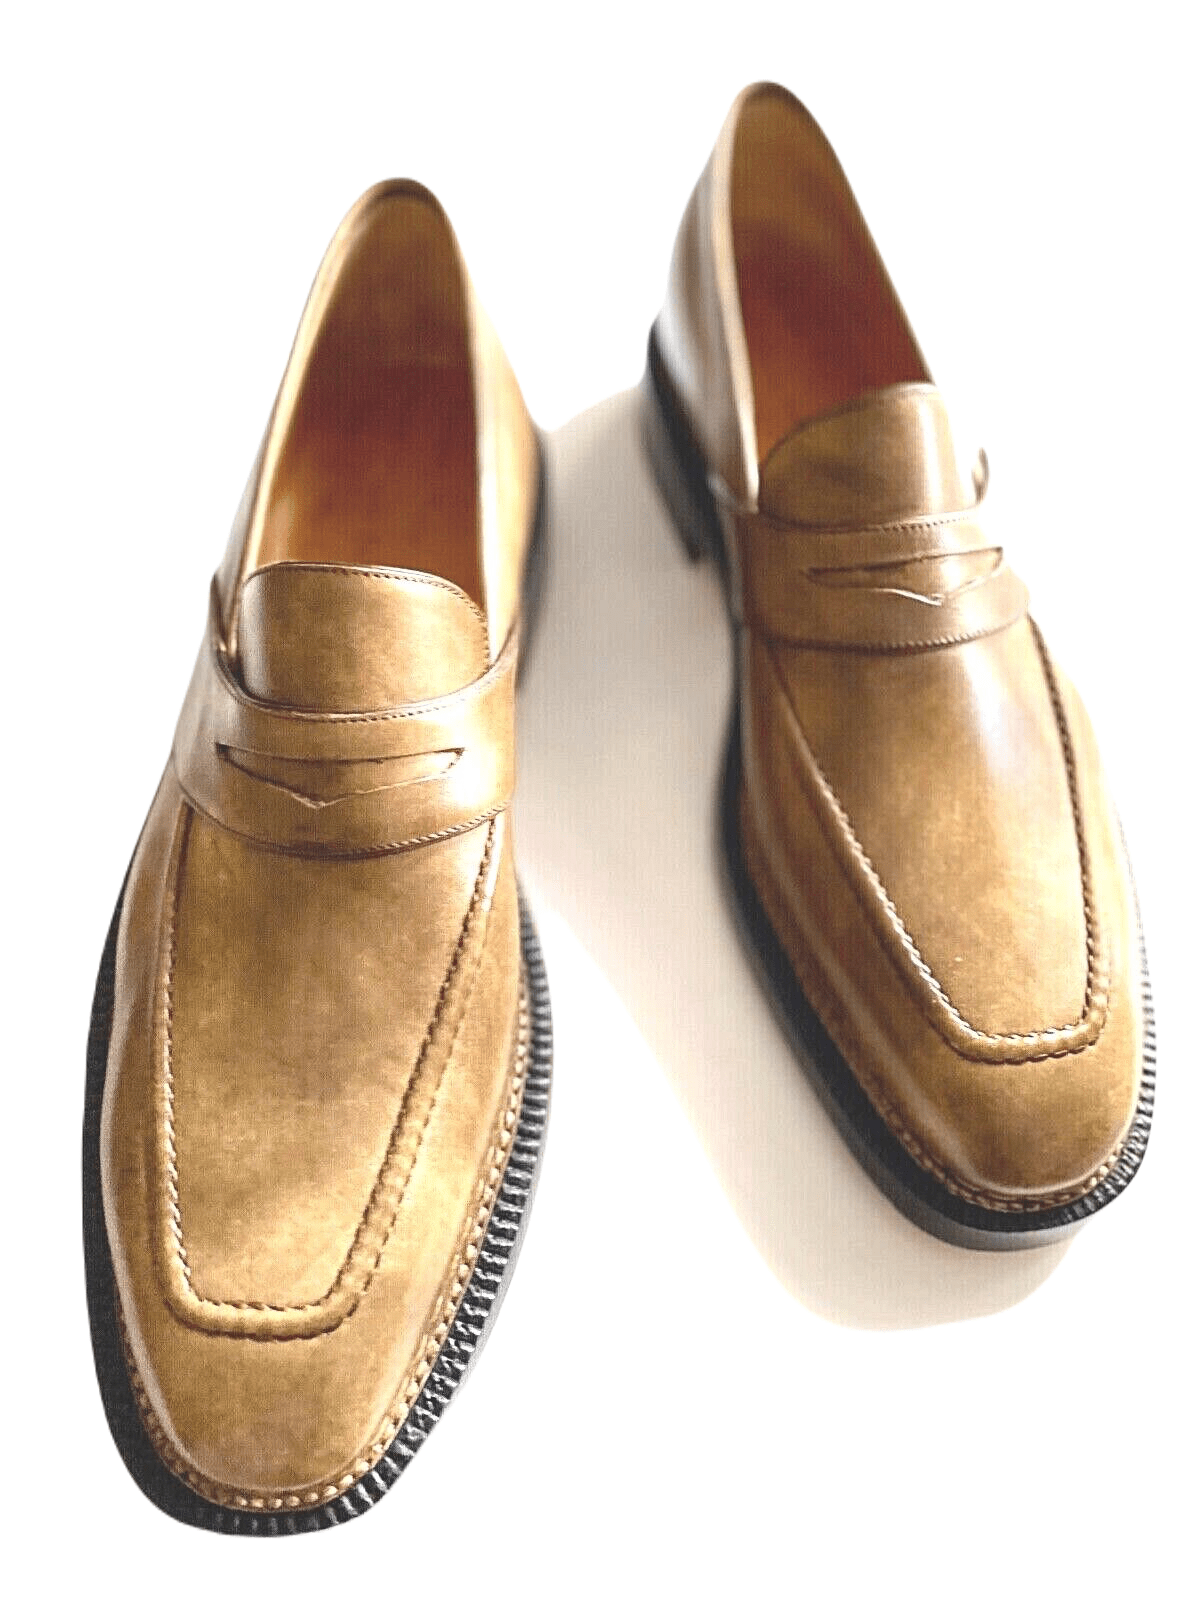 Maison Koly Marvejols Loafers handmade Khaki museum - maisonkoly.com 5 Shoes